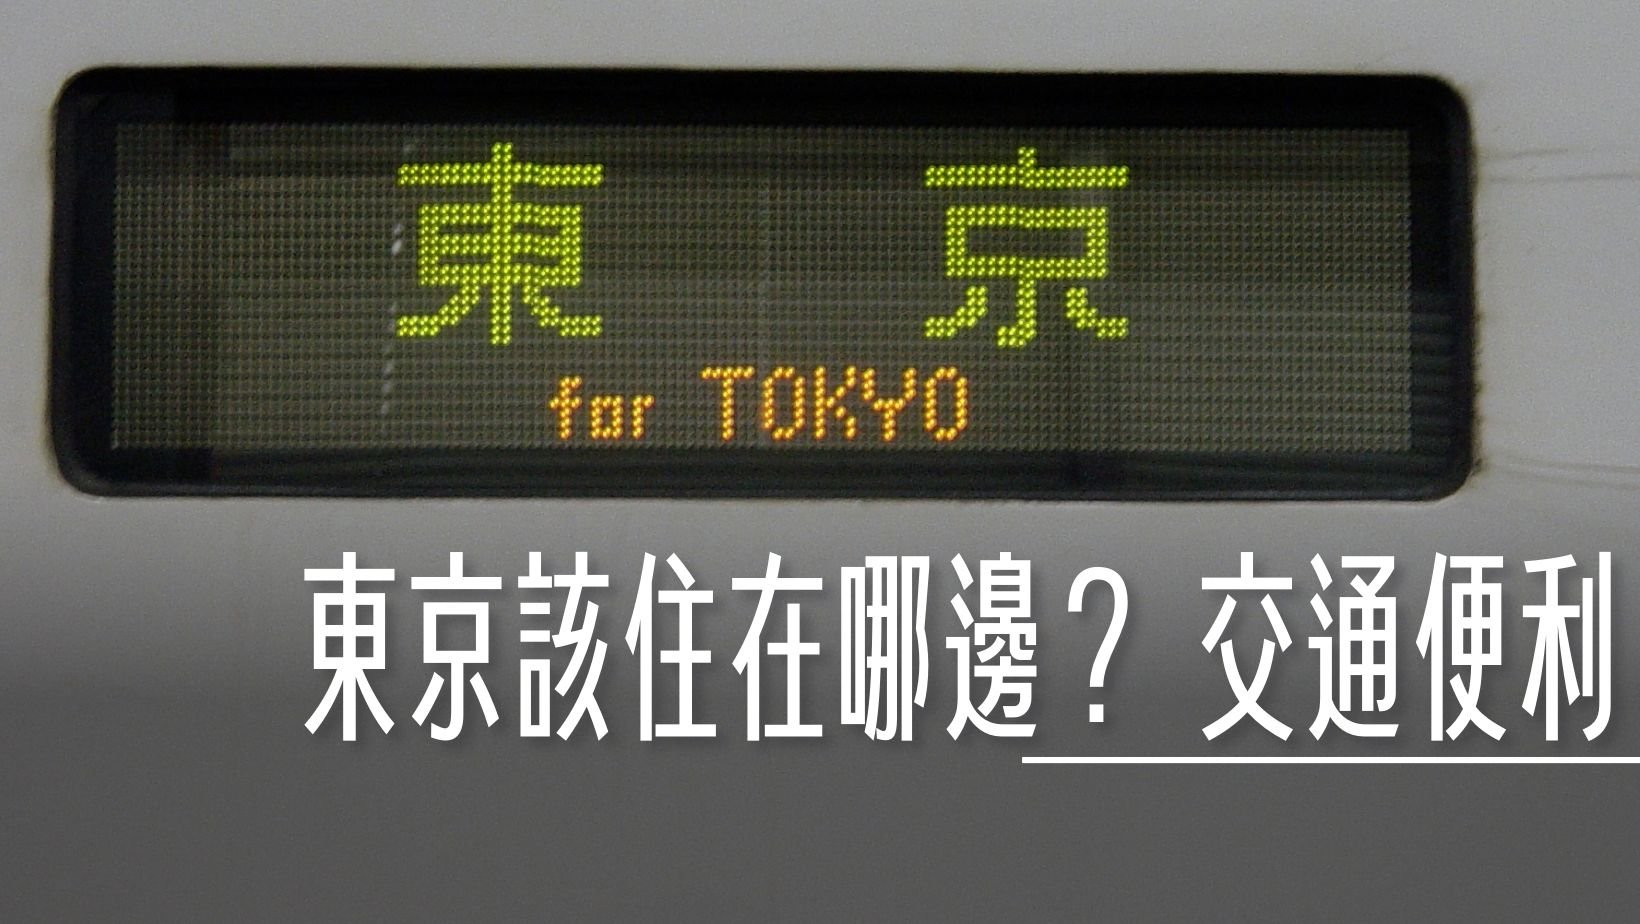 NEX 時刻表,上野,新宿,時刻表,東京,東京住哪邊,橫濱,當自己的旅行社,銀座,鐵路系統 @傑西大叔 x 這裡胡說